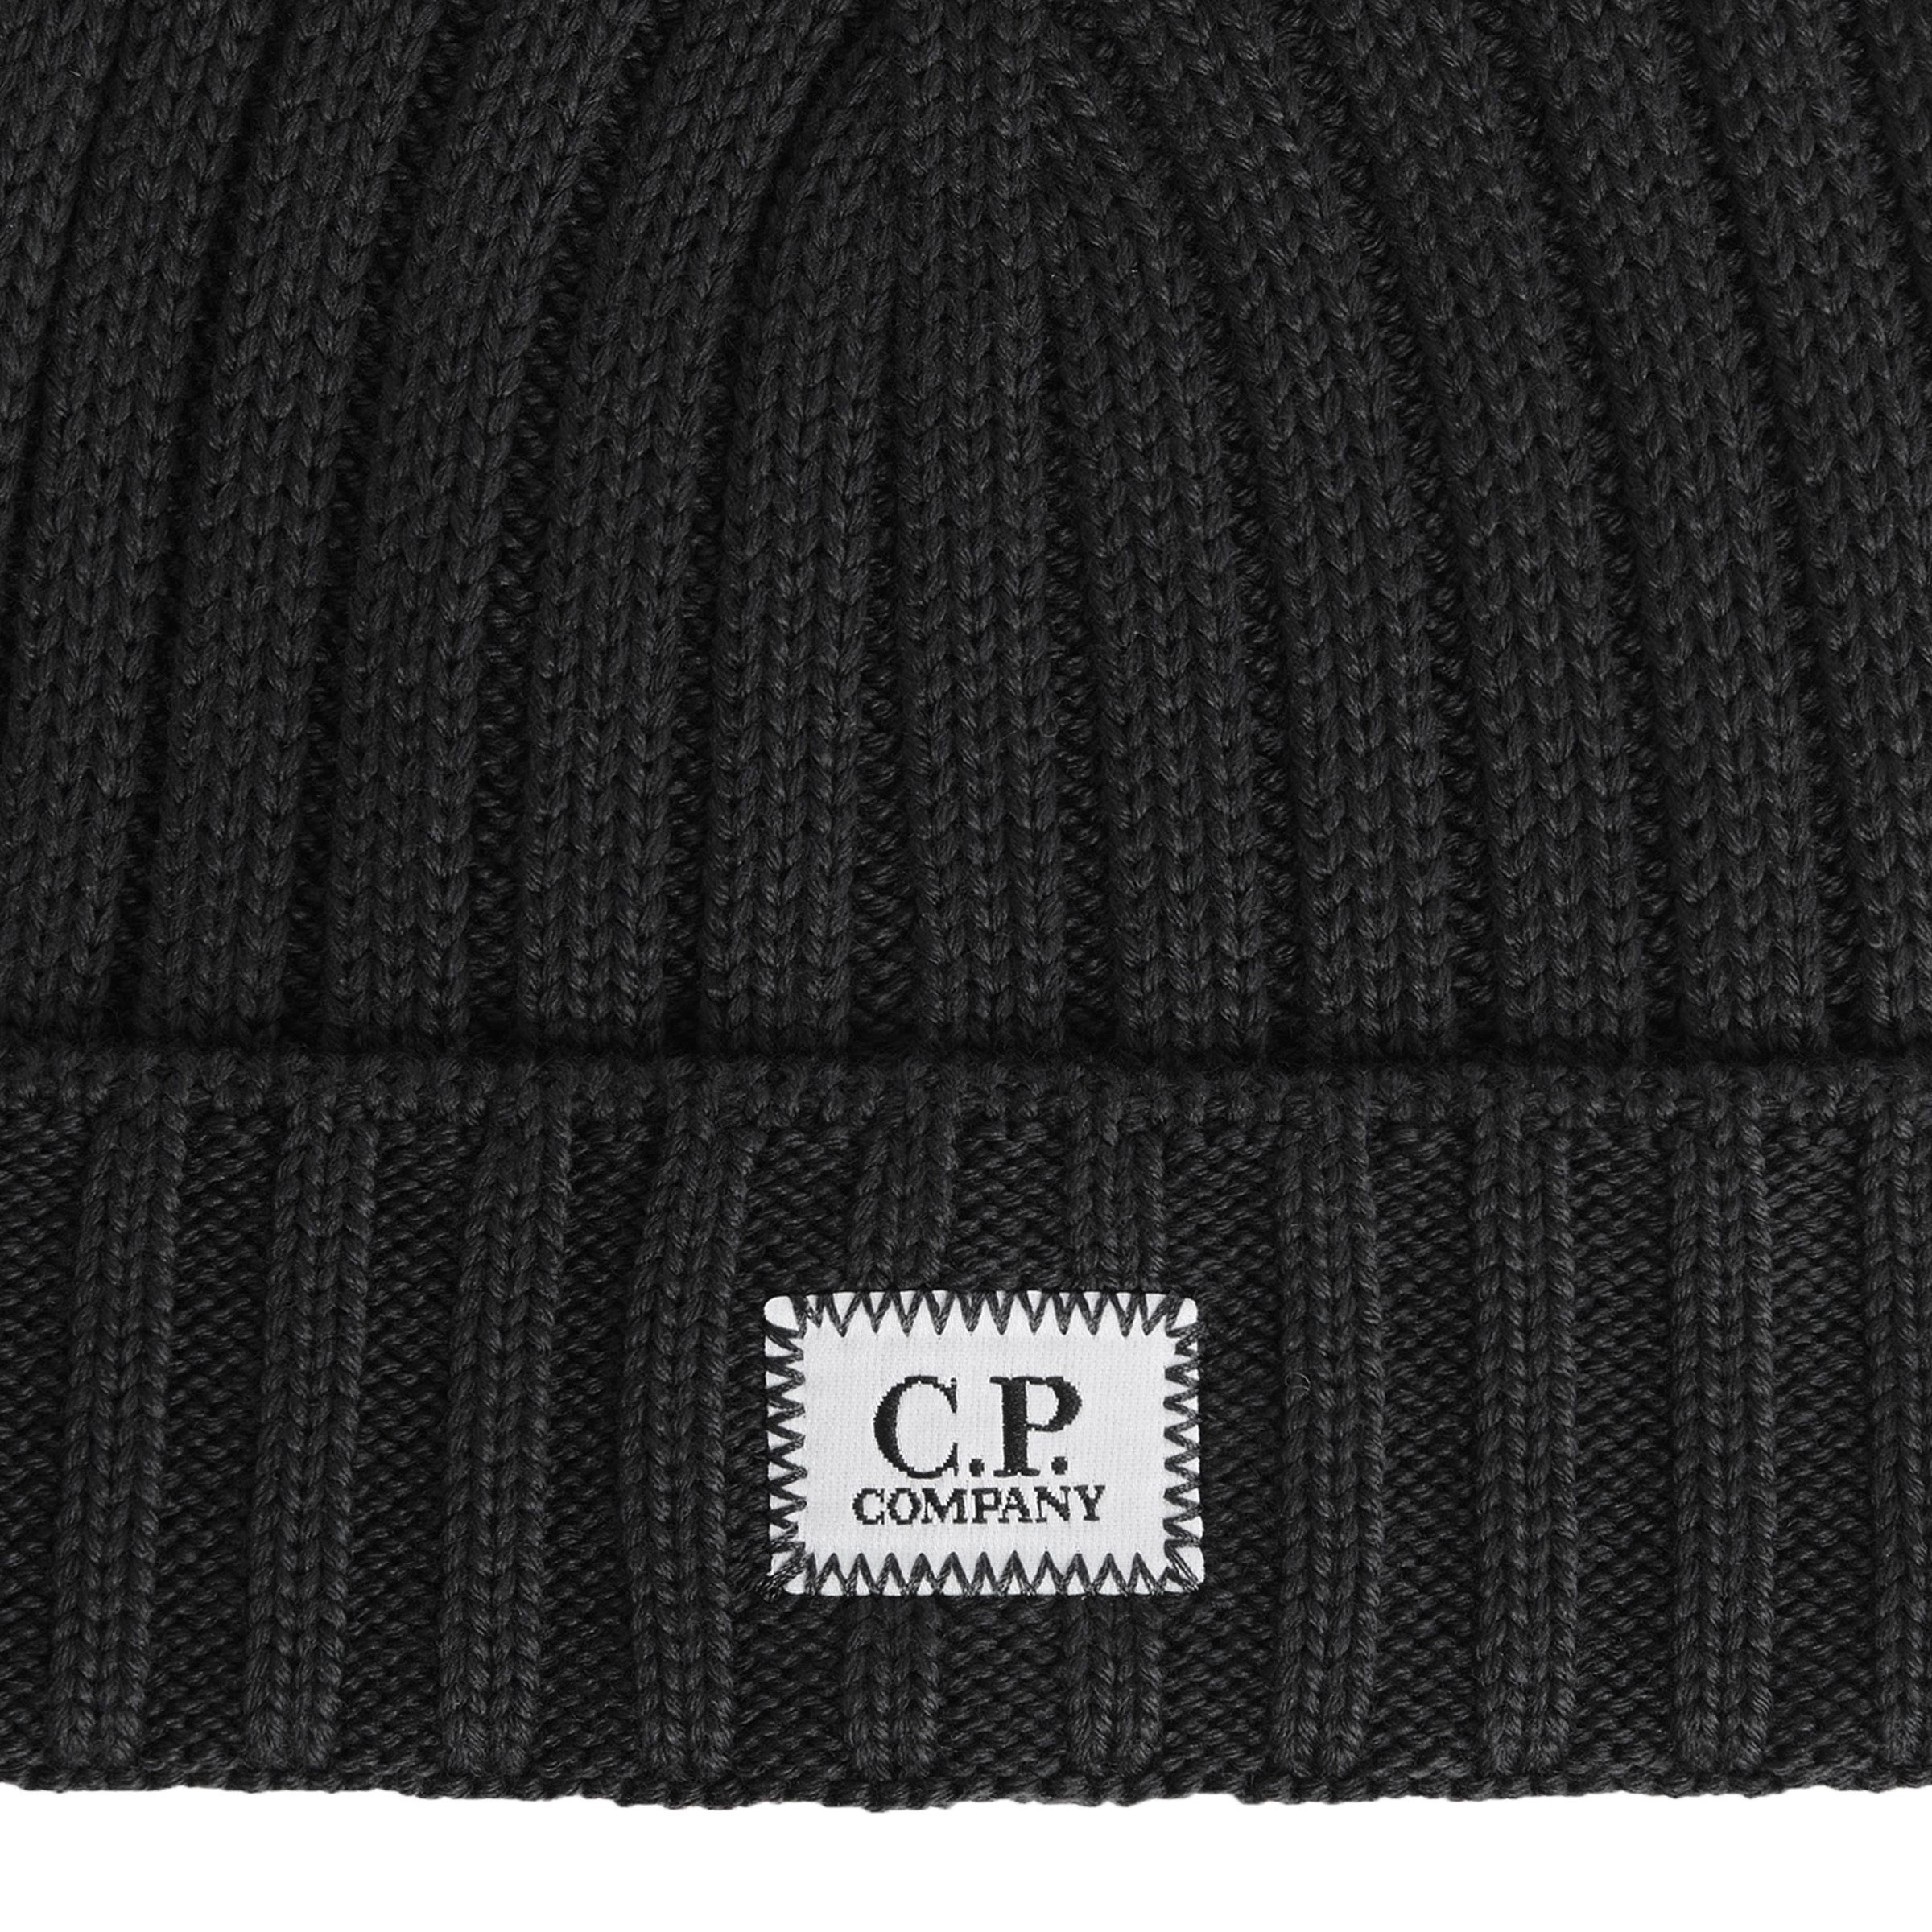 Шапка C.P. Company черная